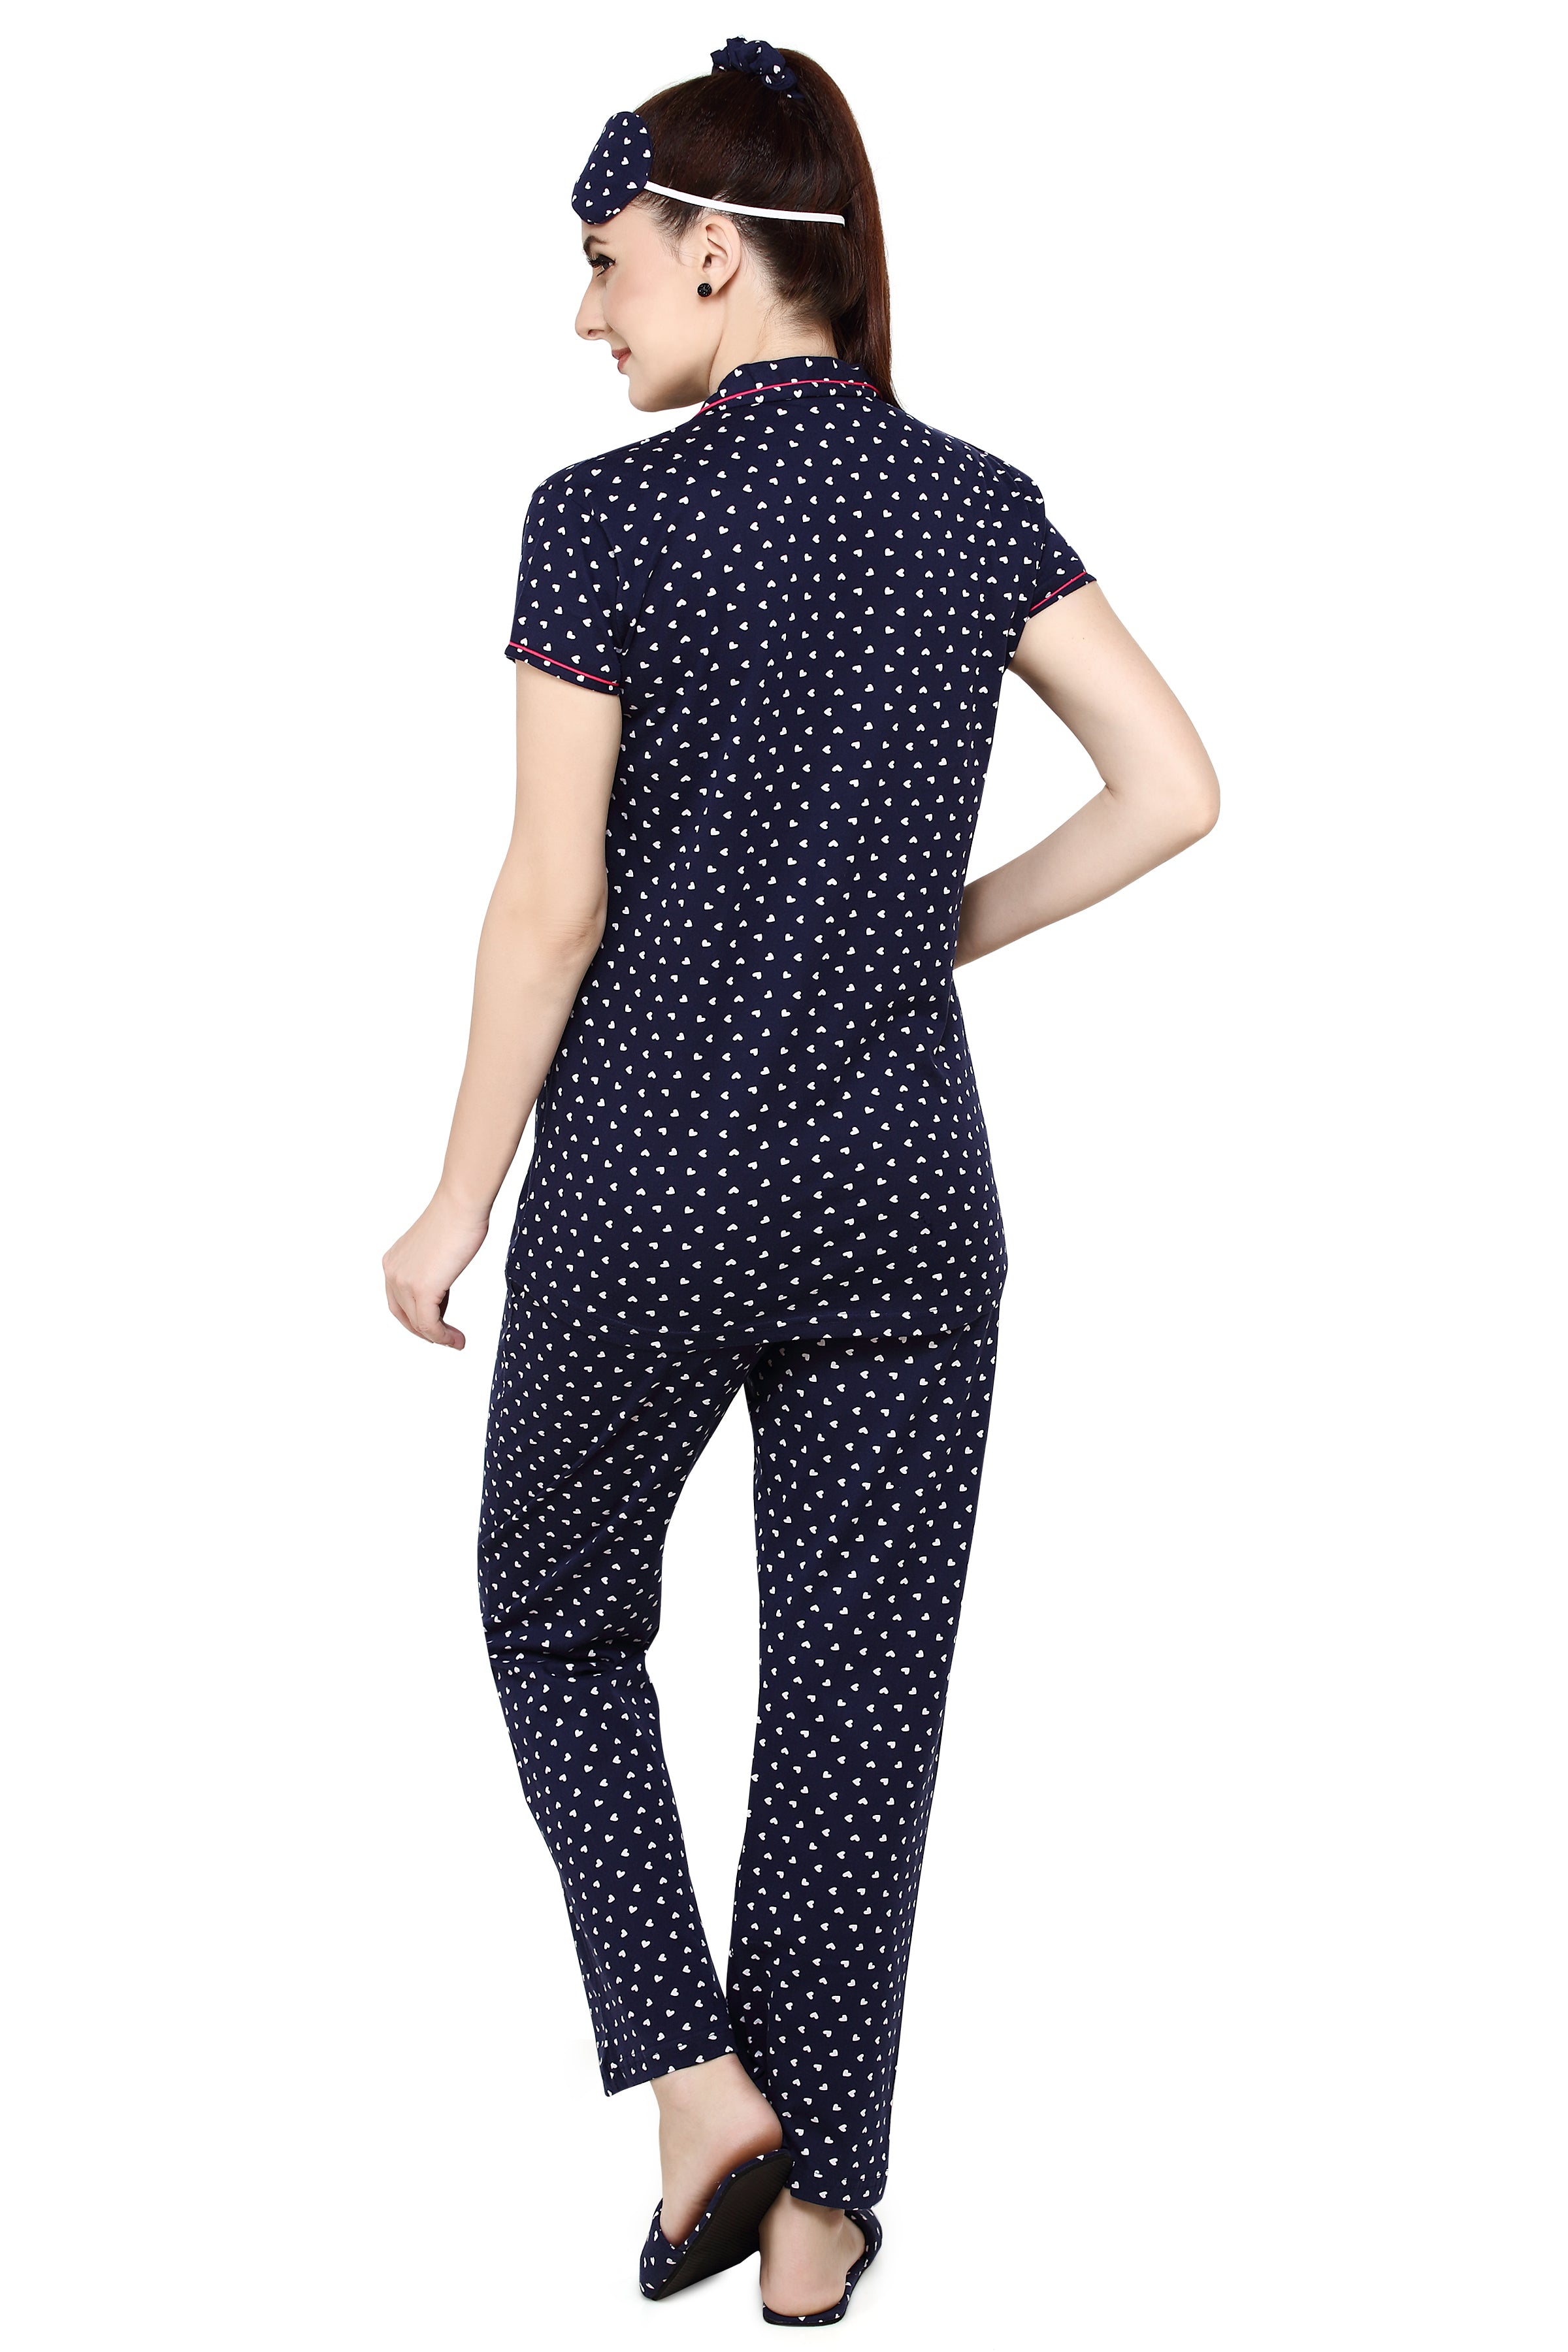 evolove Women's Hosiery Cotton Twilight Blue Hearts Print Button & Collar Shirt-Pyjama Set / Night Suit